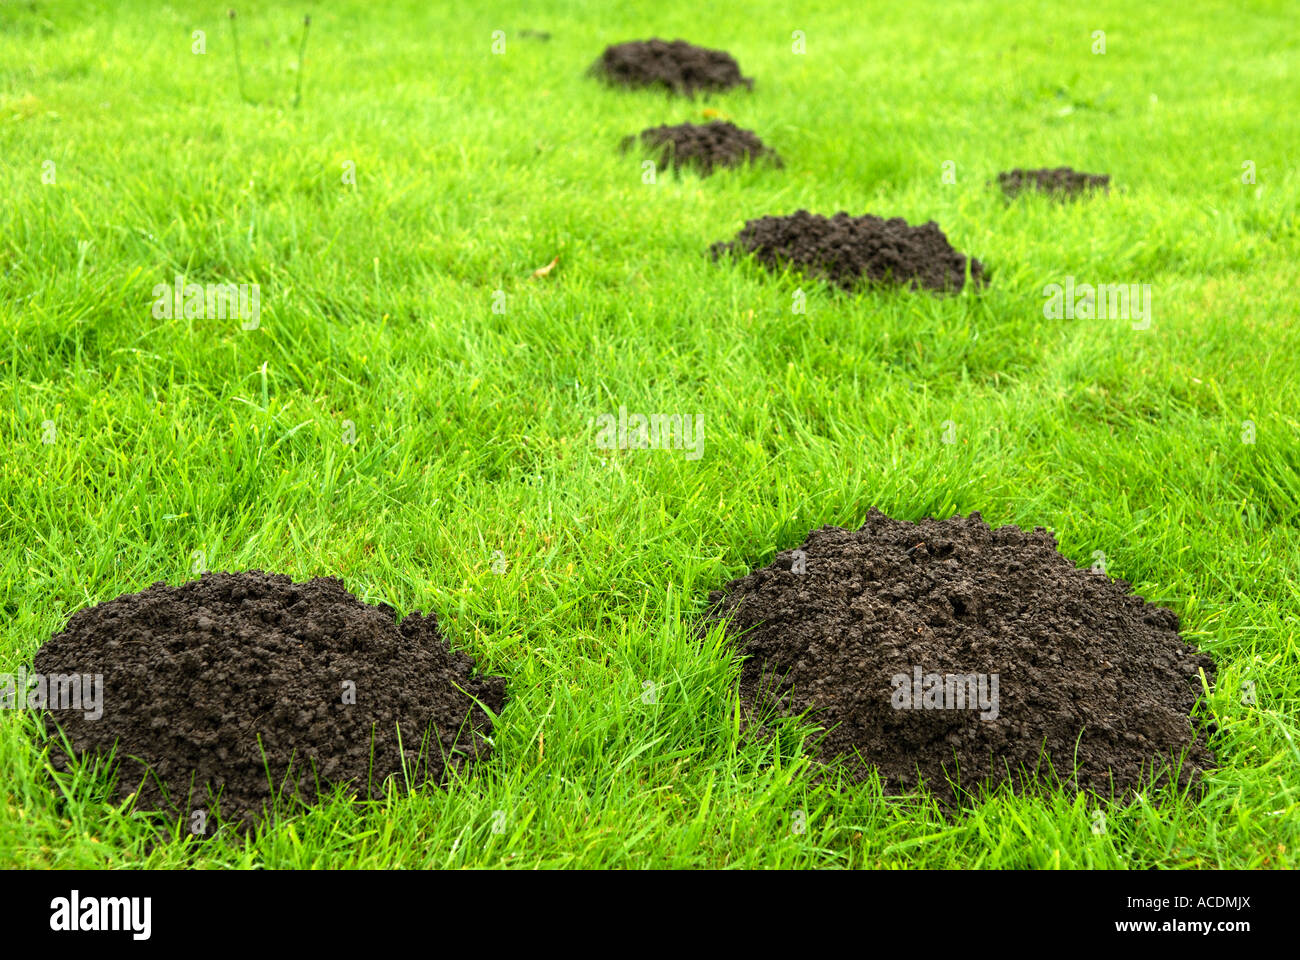 Mole hills  on grass. Stock Photo